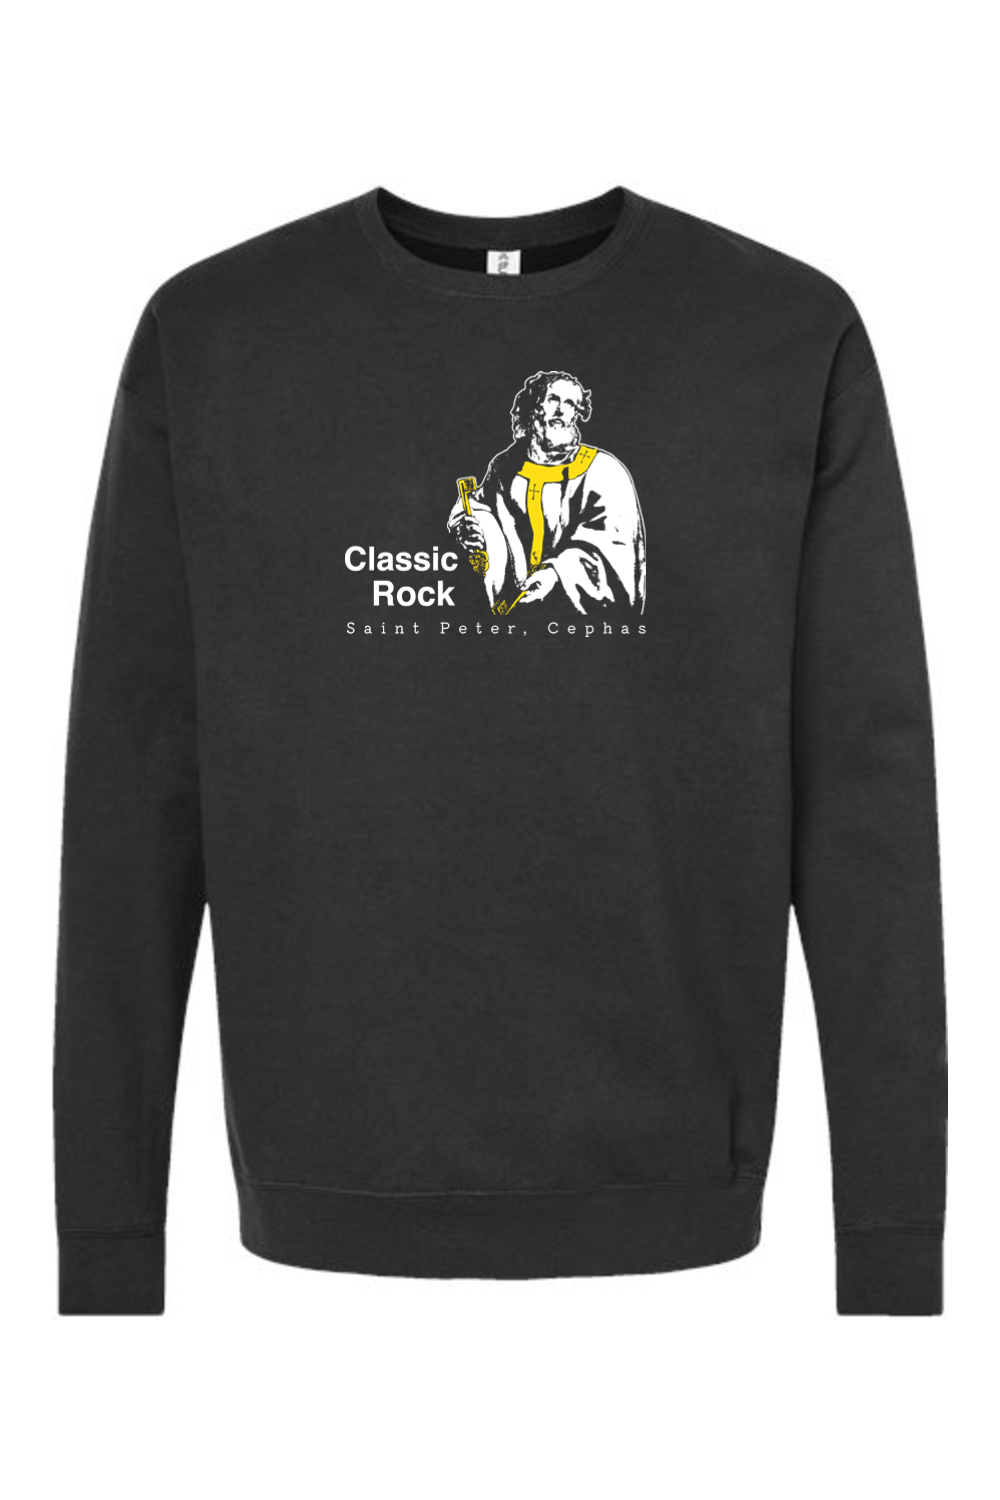 Classic Rock - St. Peter, Cephas Crewneck Sweatshirt